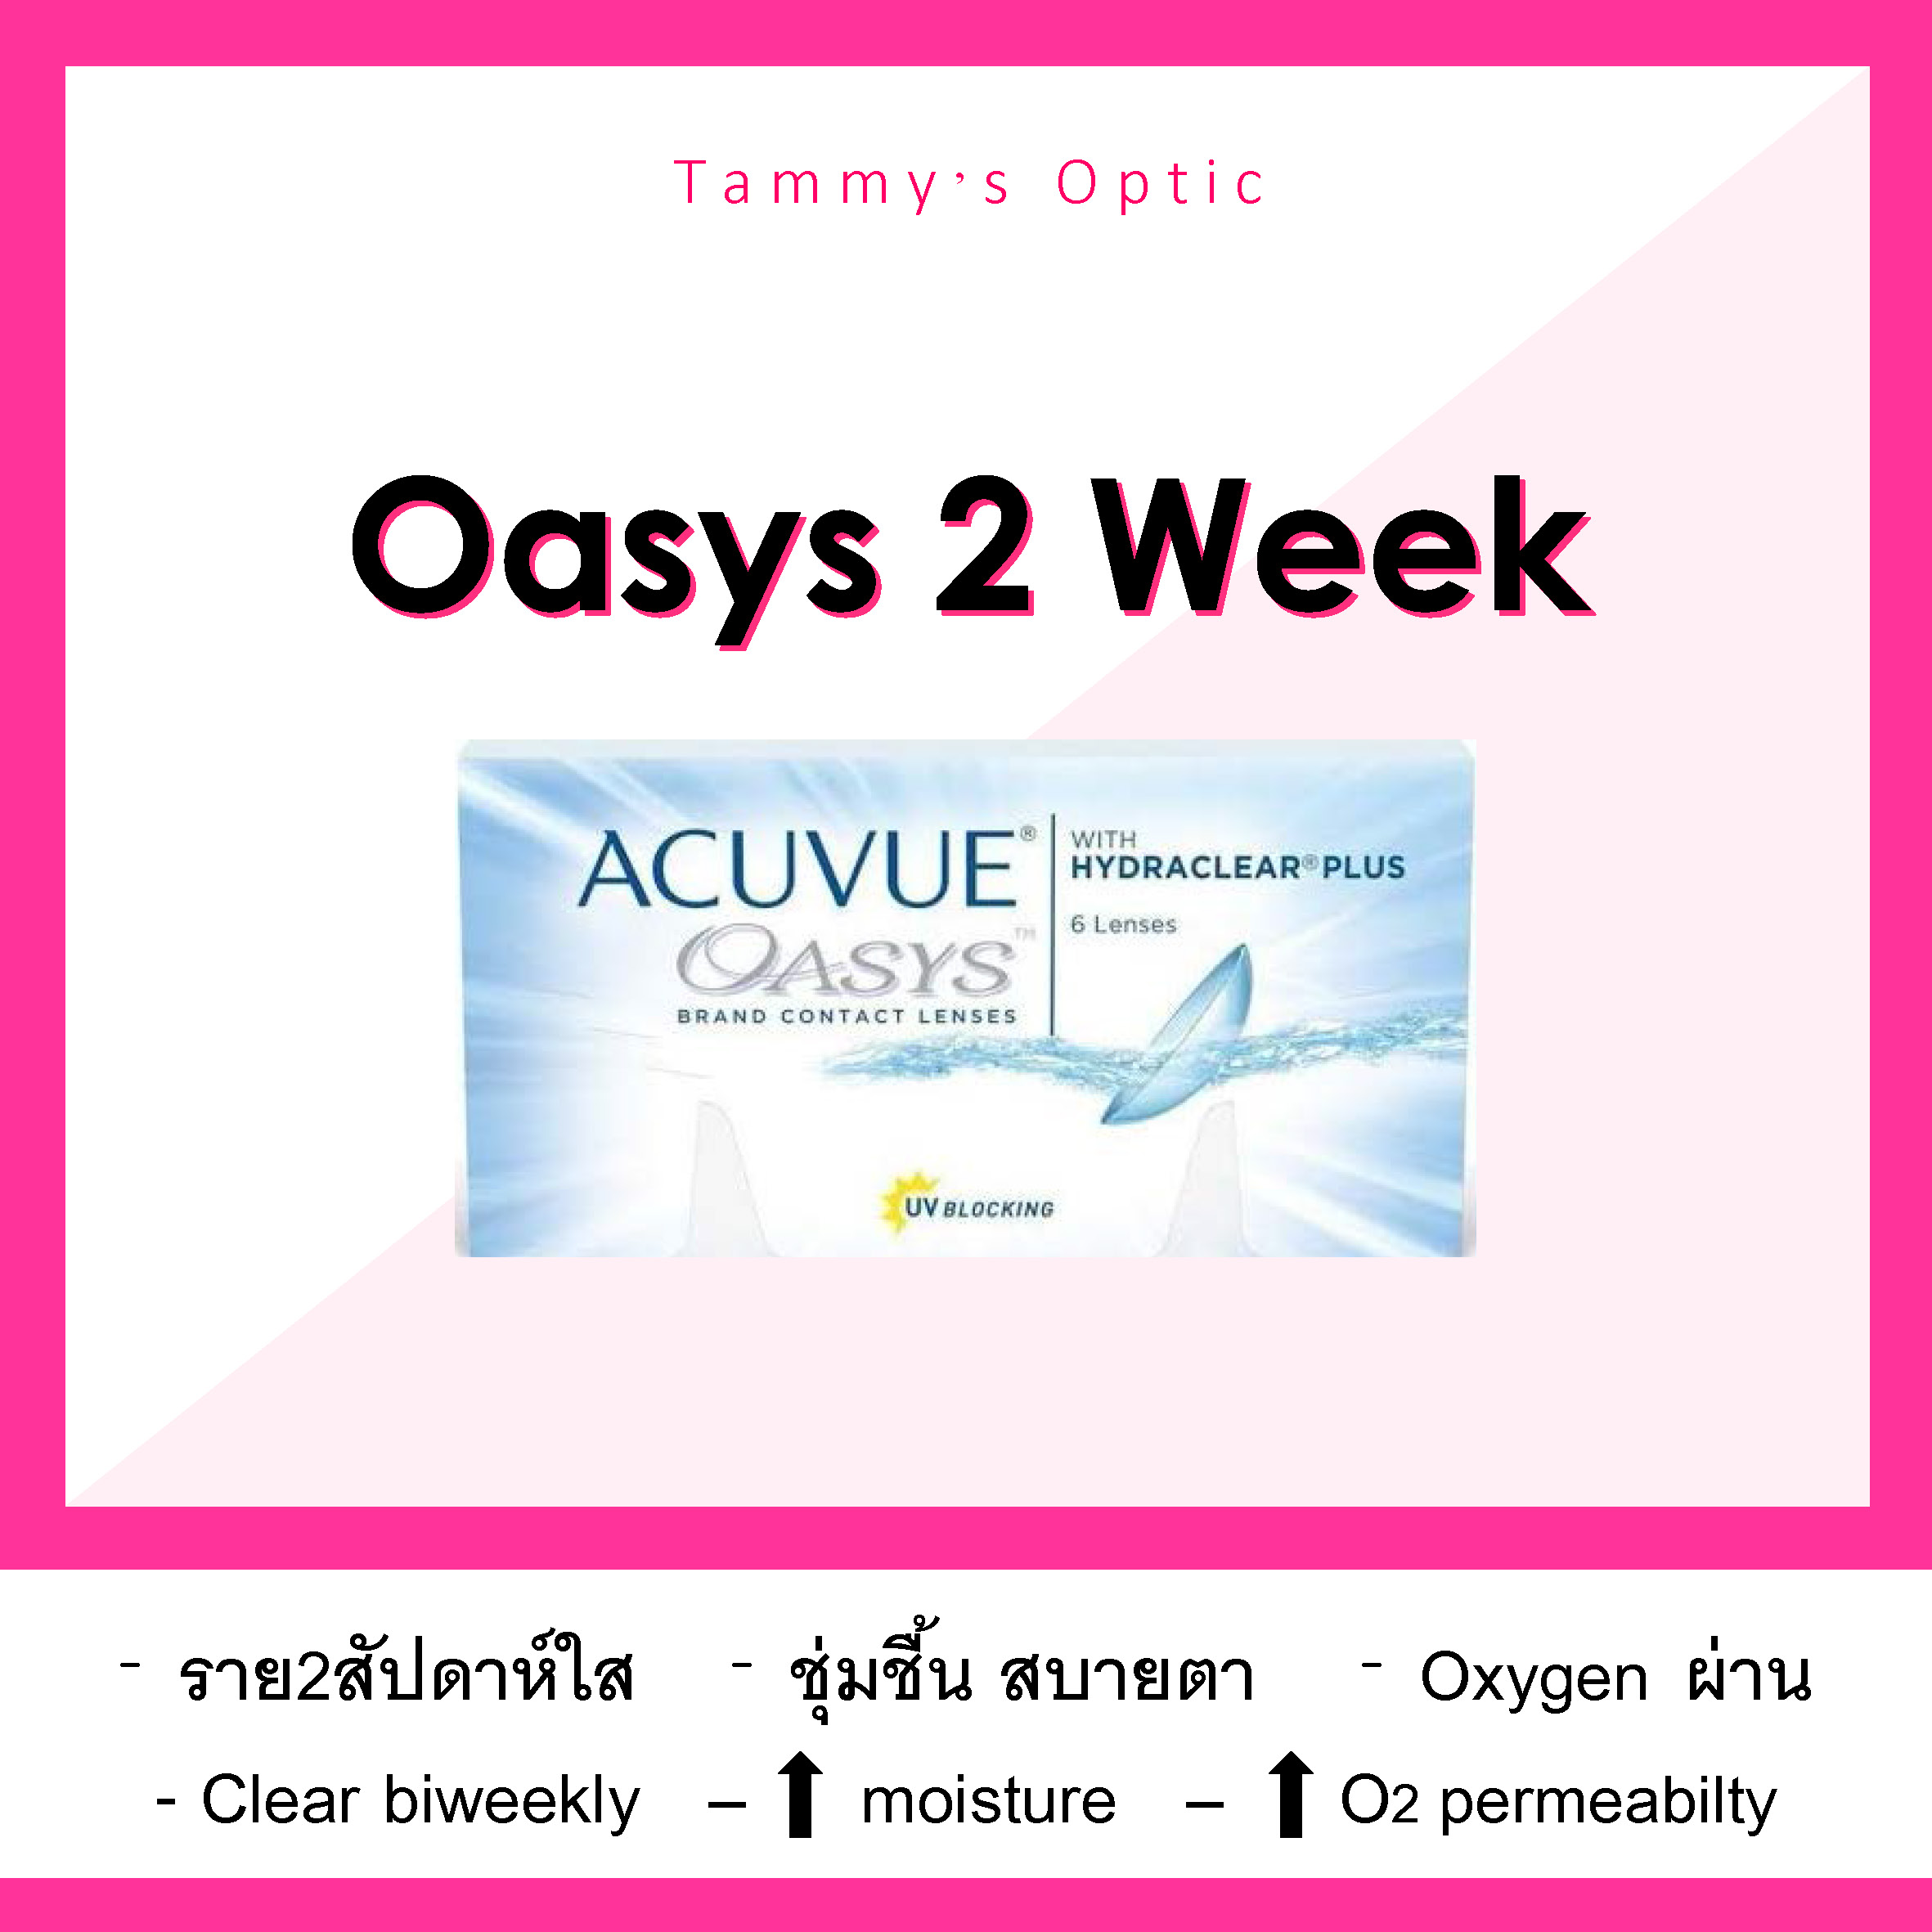 ACUVUE OASYS 2 WEEK basecurve 8.8 tammy's optic